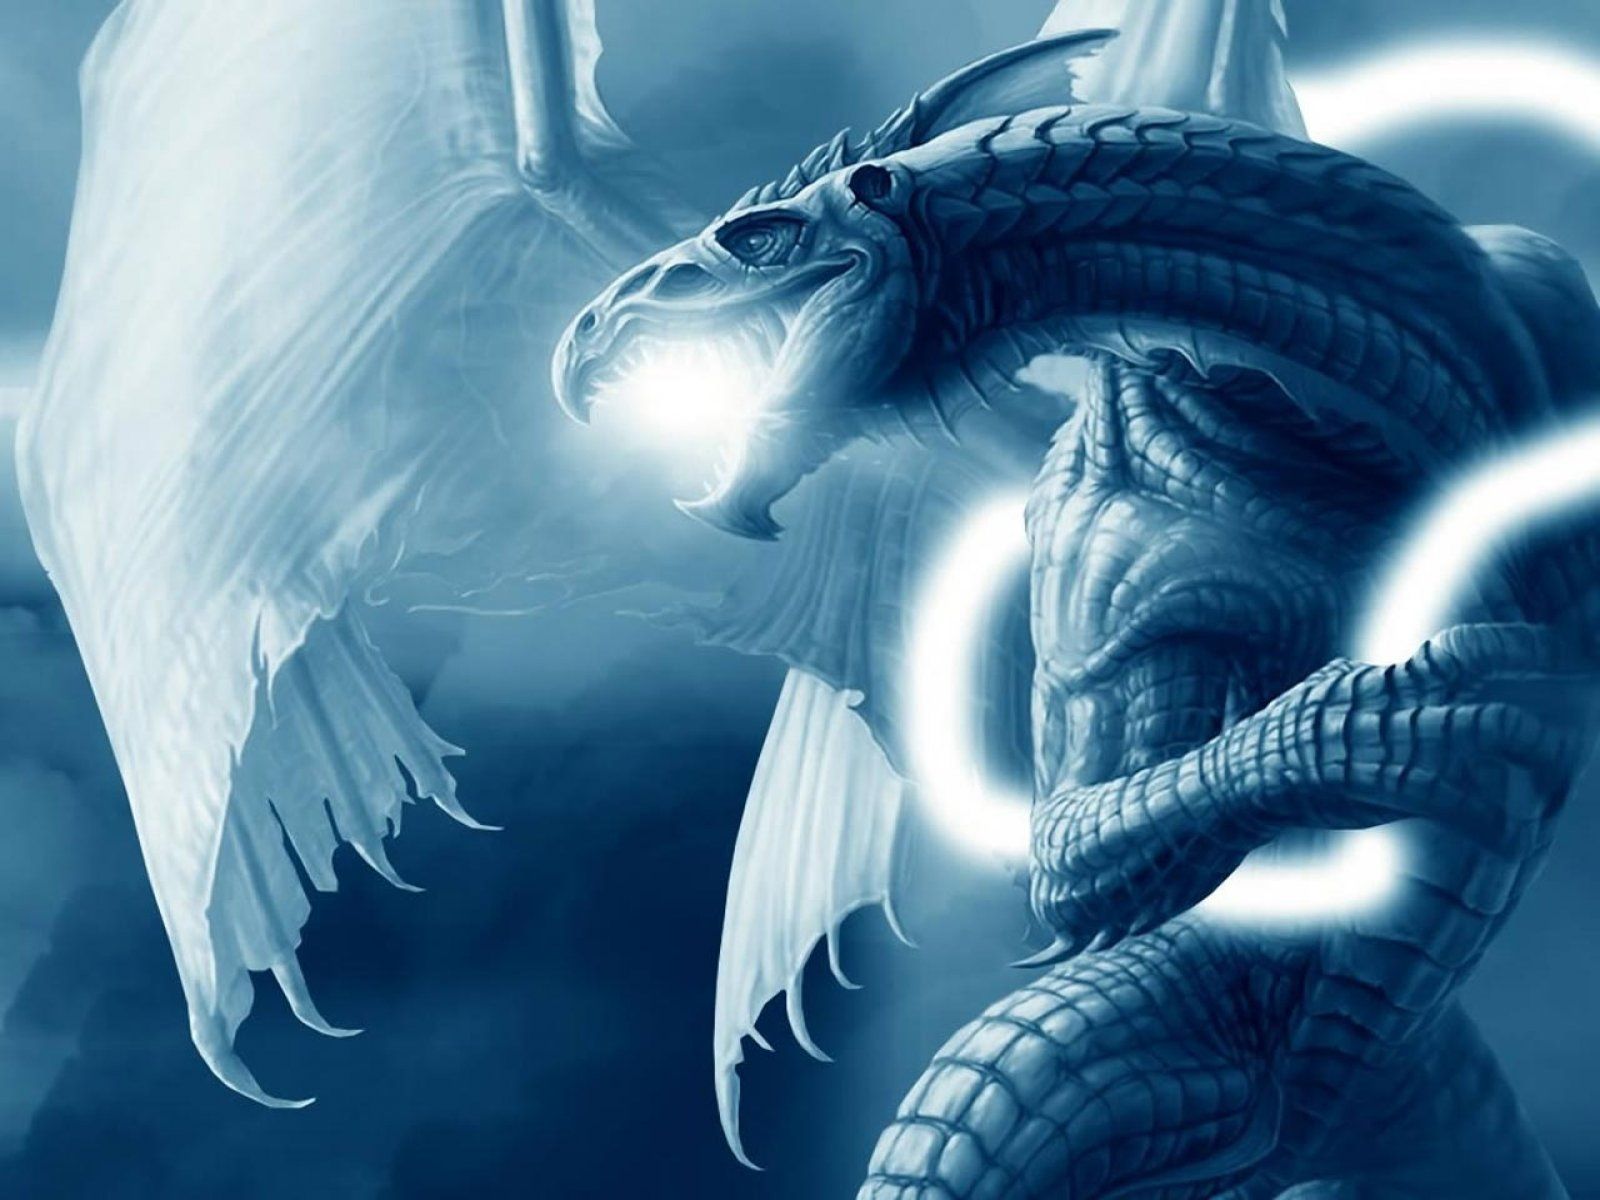 Top Blue Dragon Wallpaper Images for Pinterest